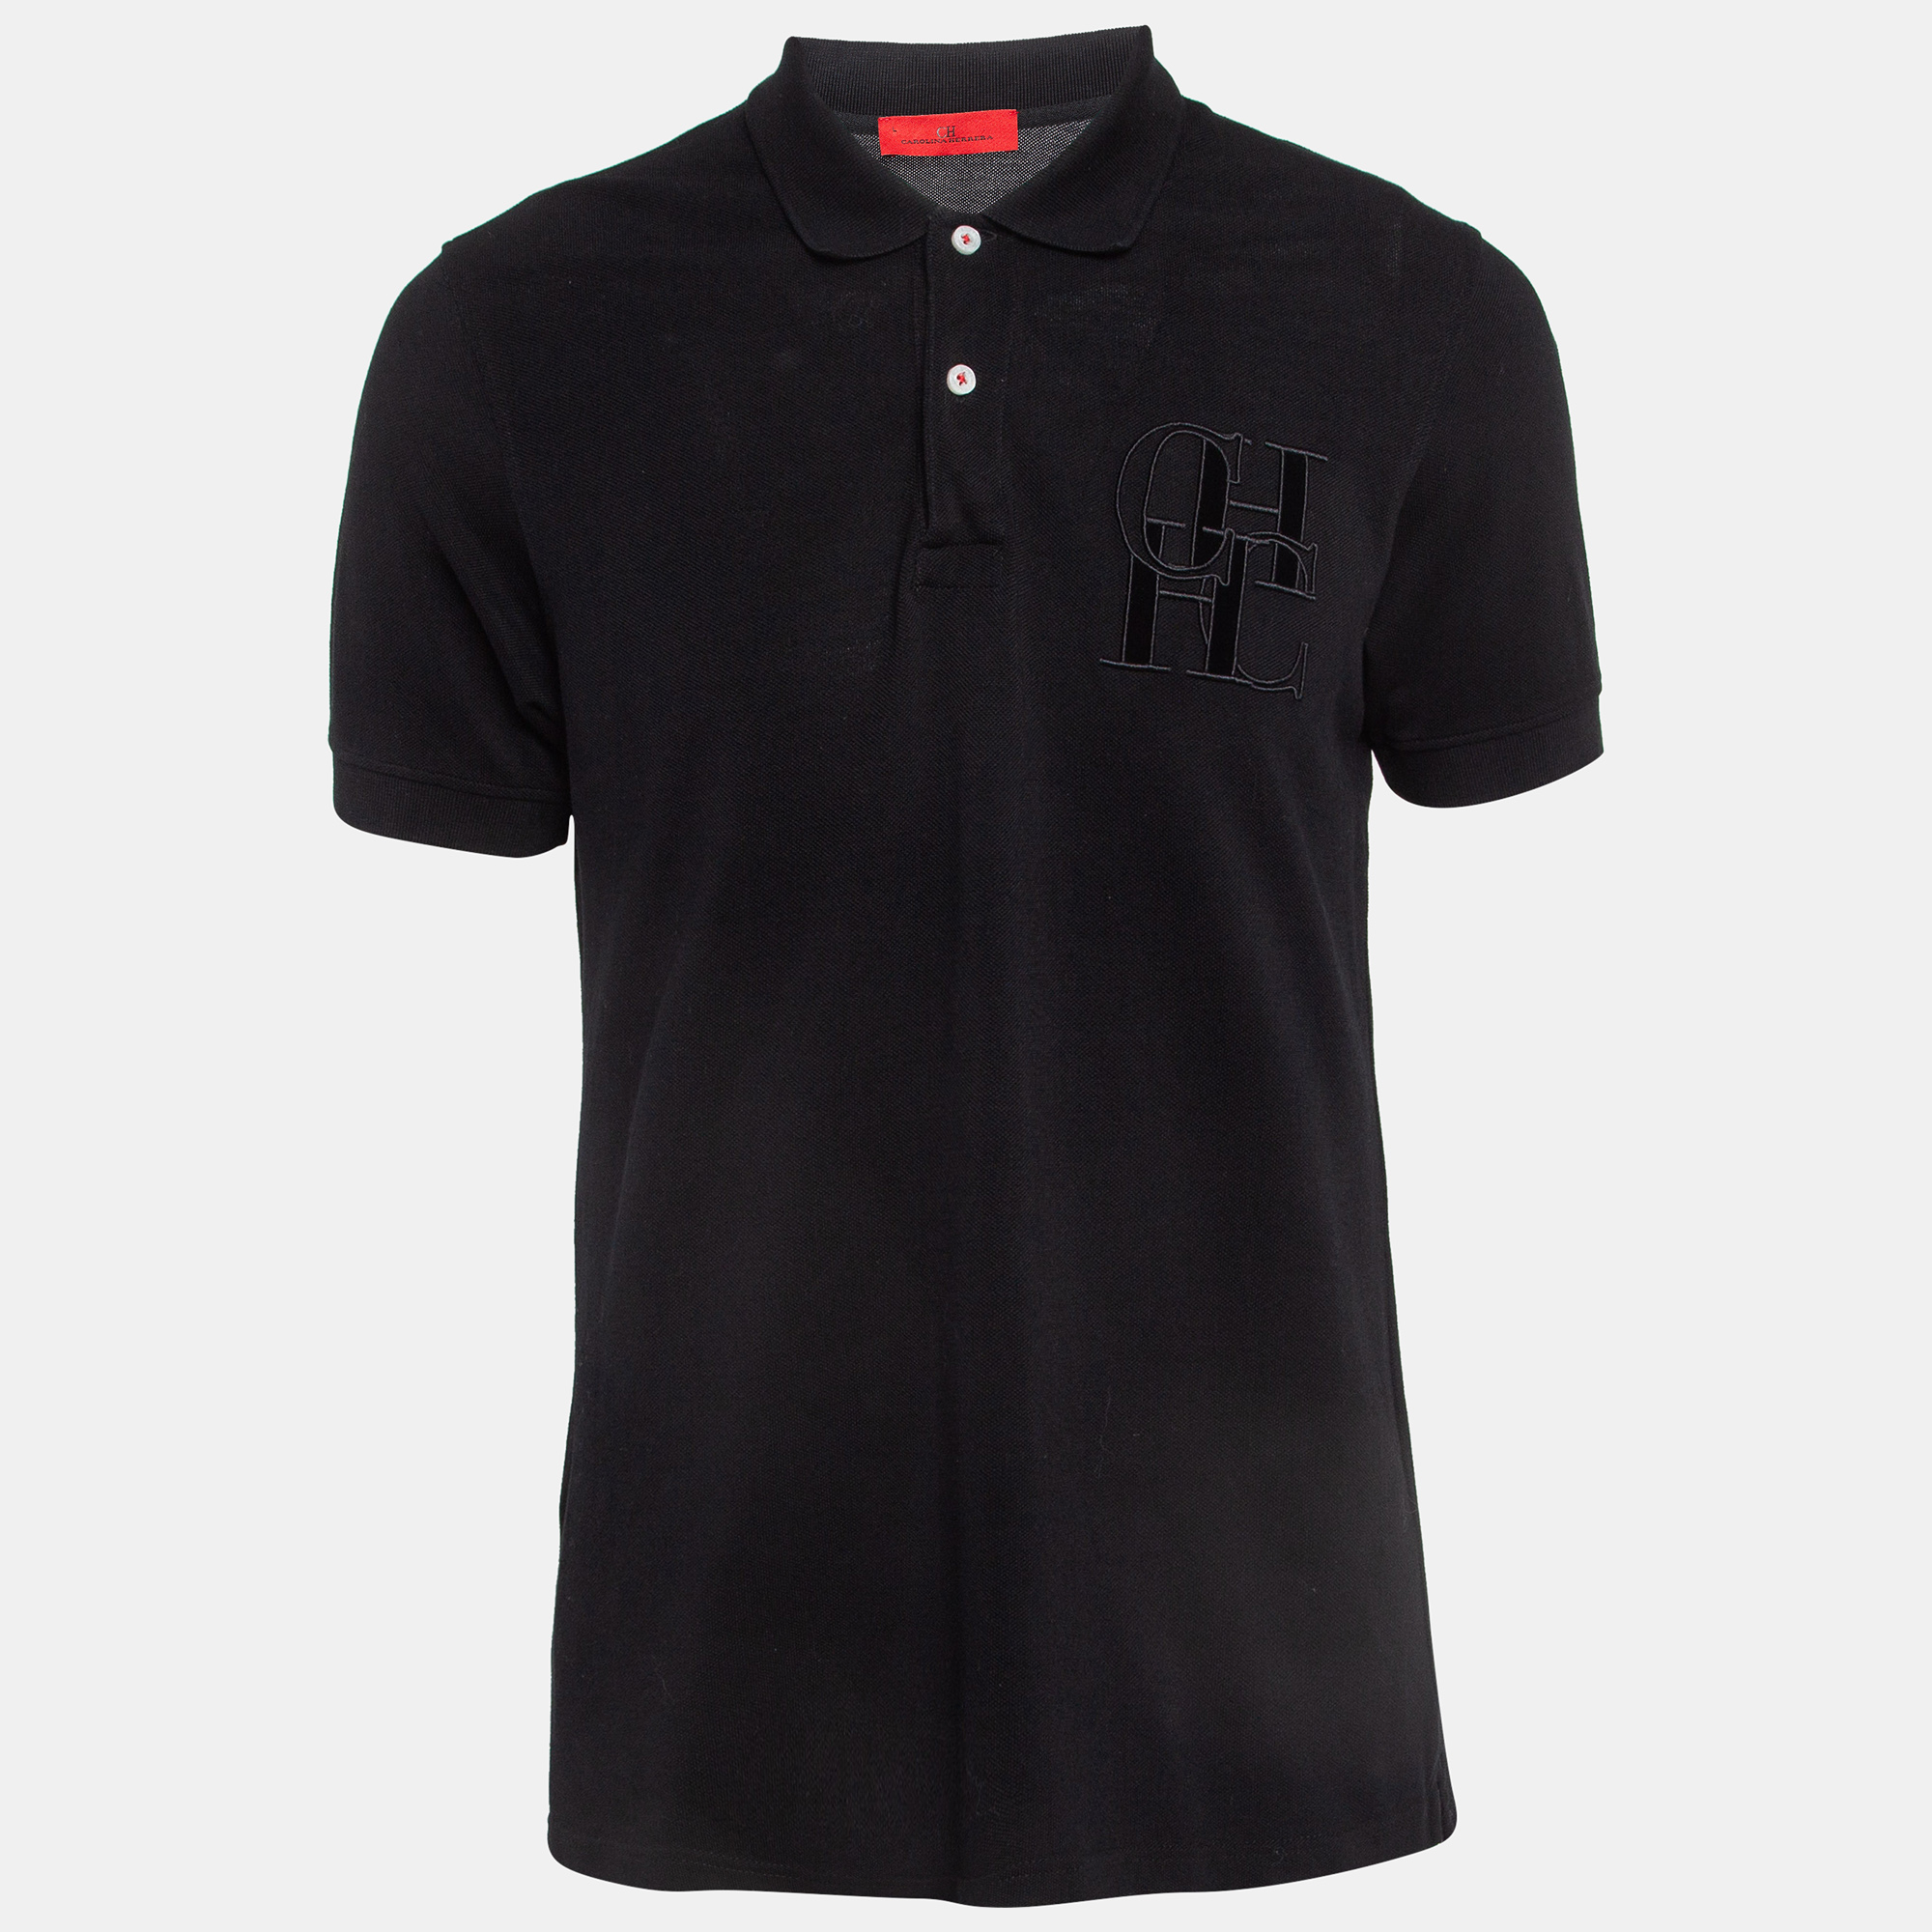 

CH Carolina Herrera Black Embroidered Cotton Pique Polo T-Shirt